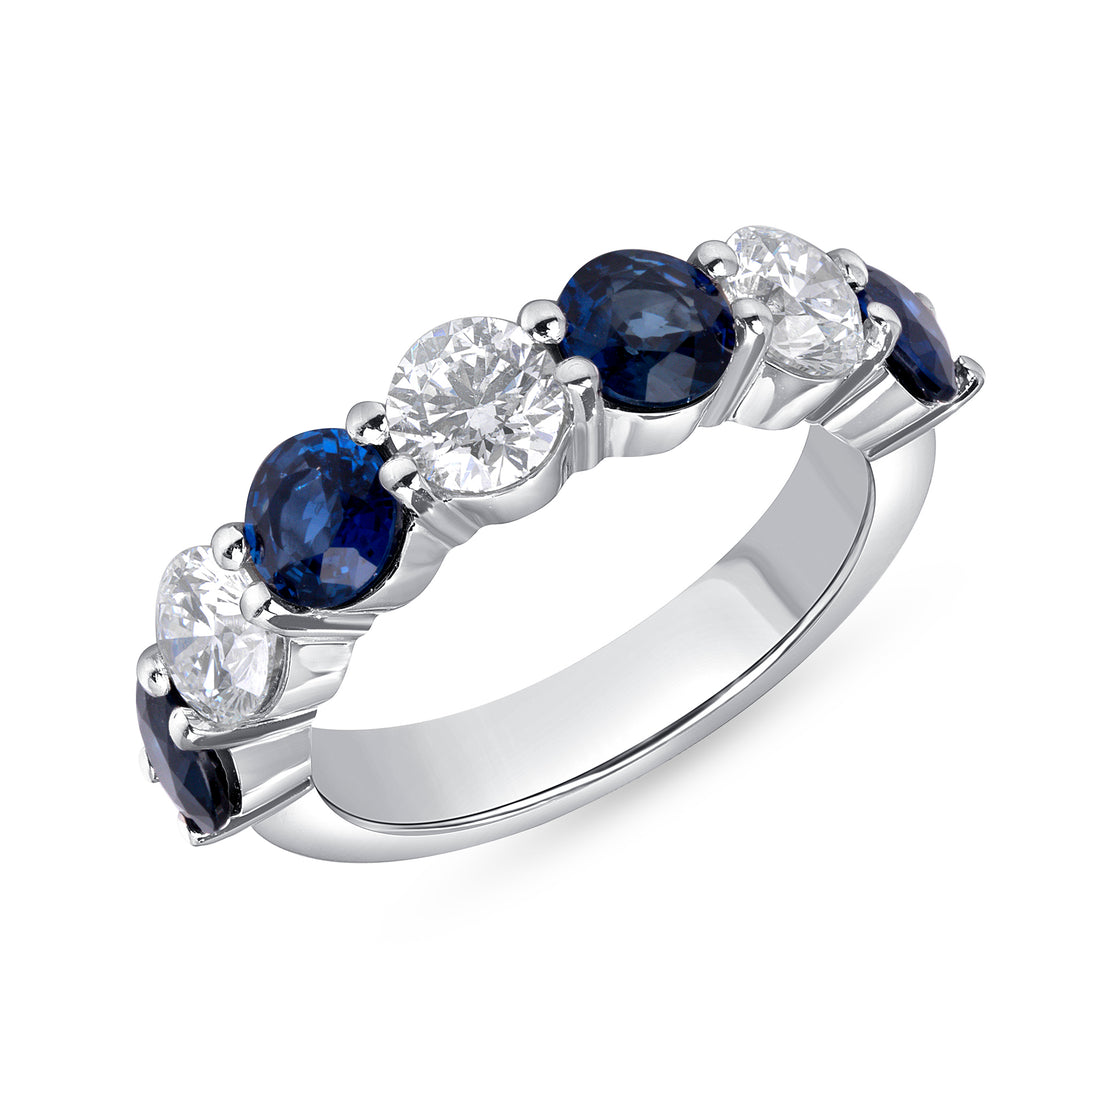 2.9 CT. Alternating Round Brilliant Blue Sapphire and Diamond Halfway Ring in Platinum